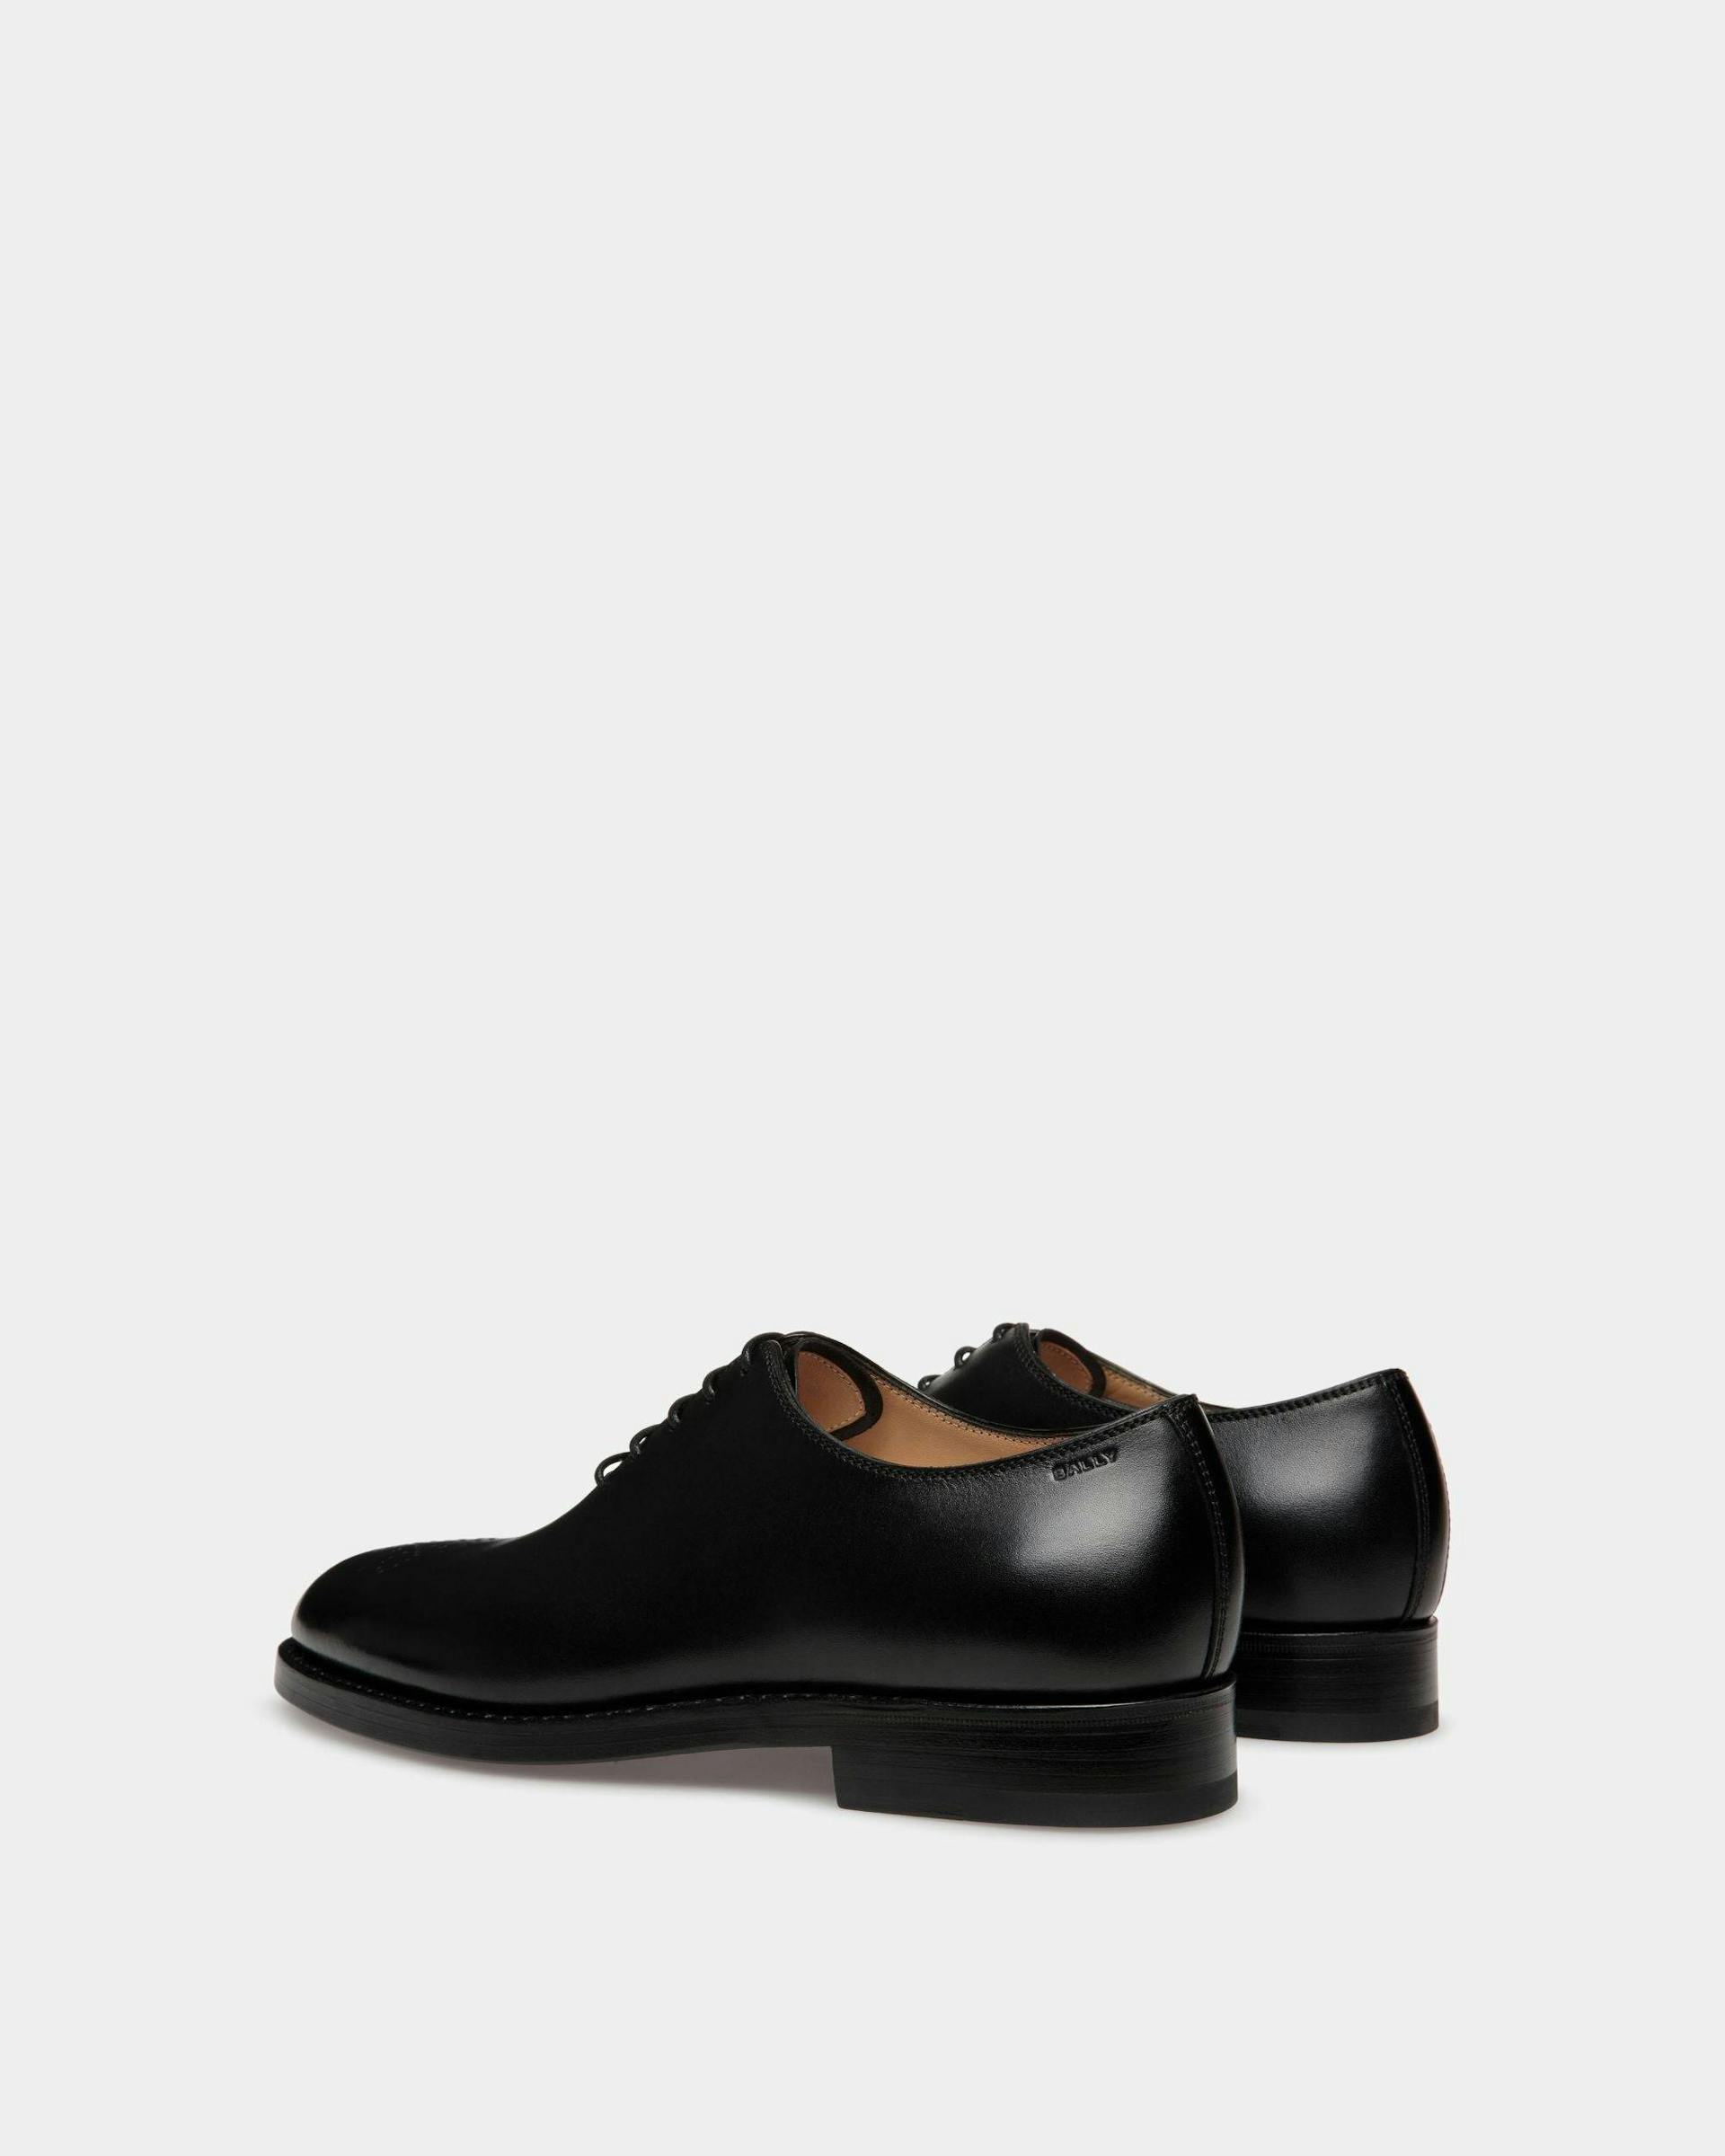 Men's Schoenen Oxford In Black Leather | Bally | Still Life 3/4 Back